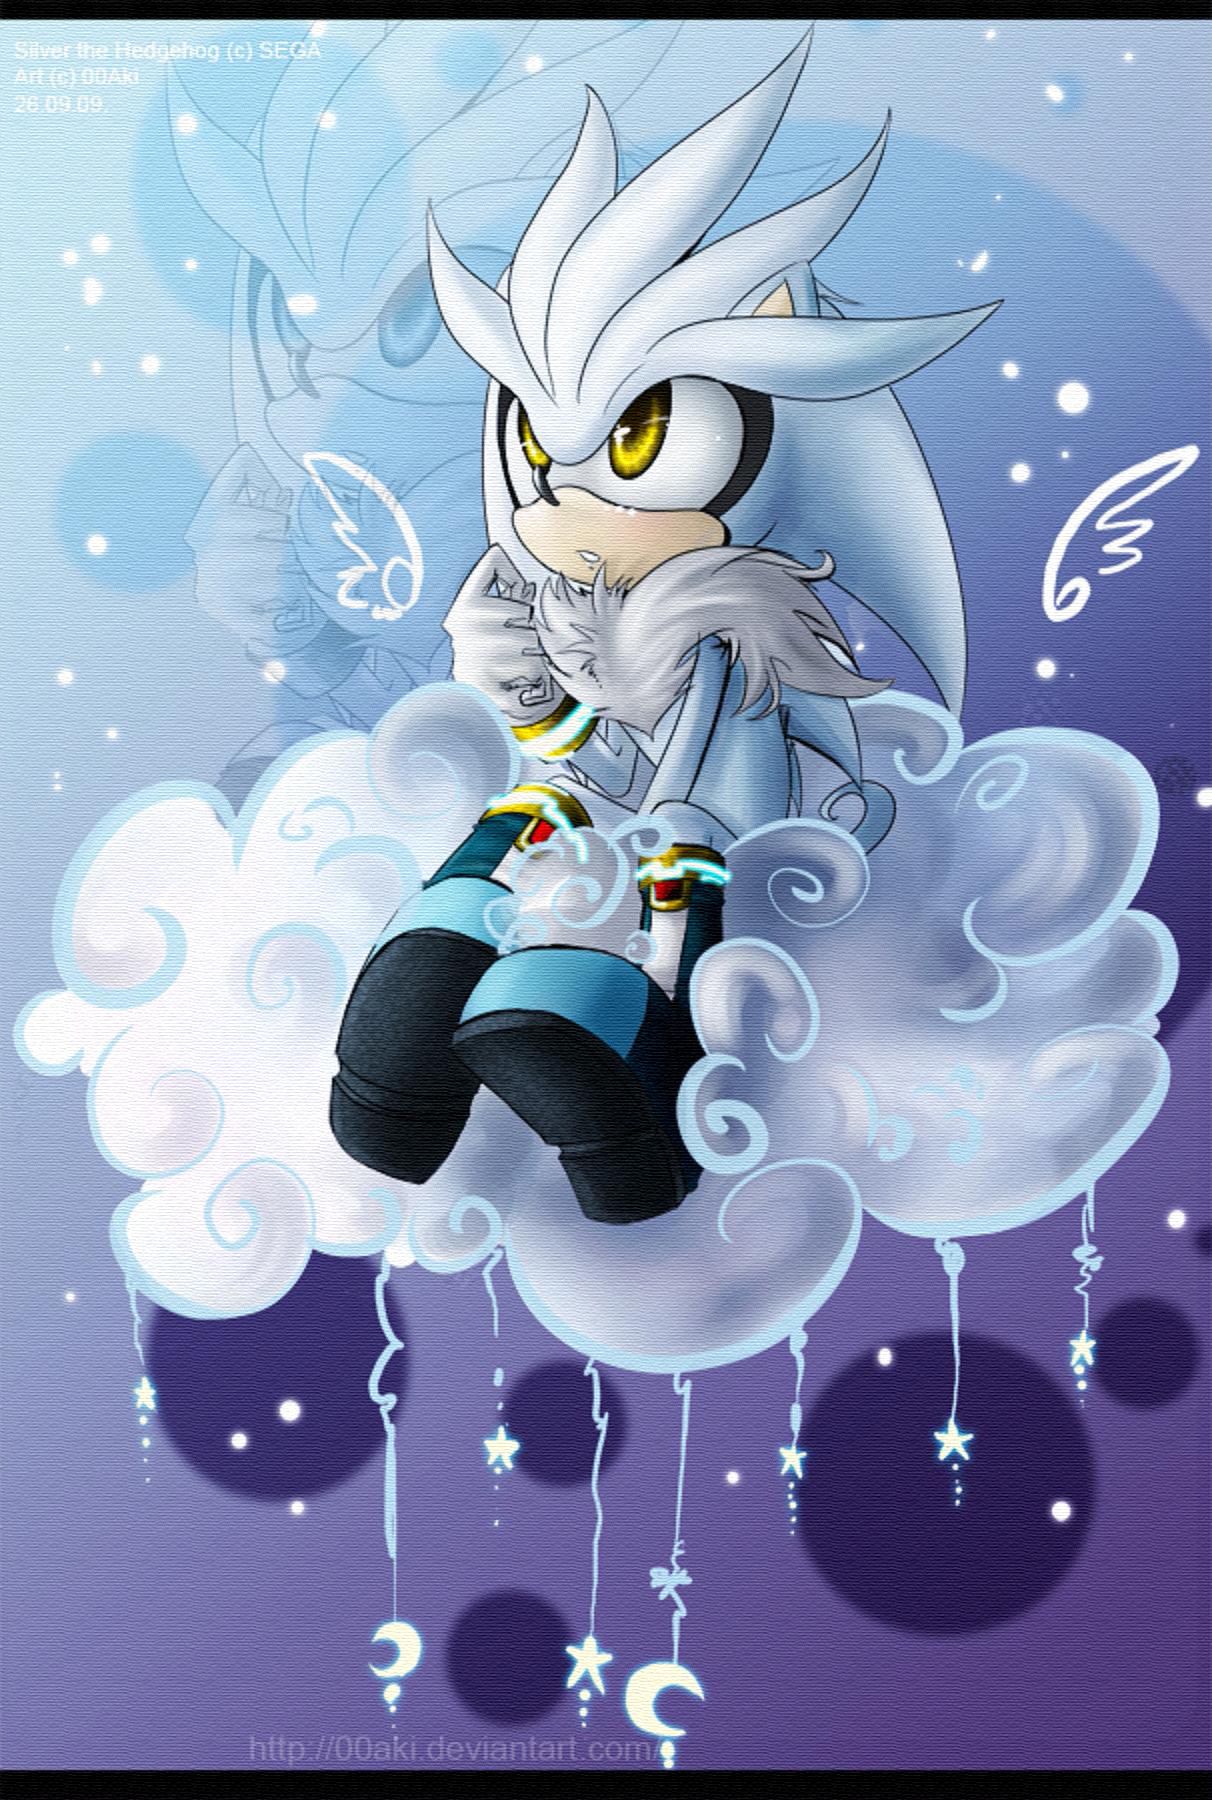 Silver the Hedgehog, Mobile Wallpaper Anime Image Board